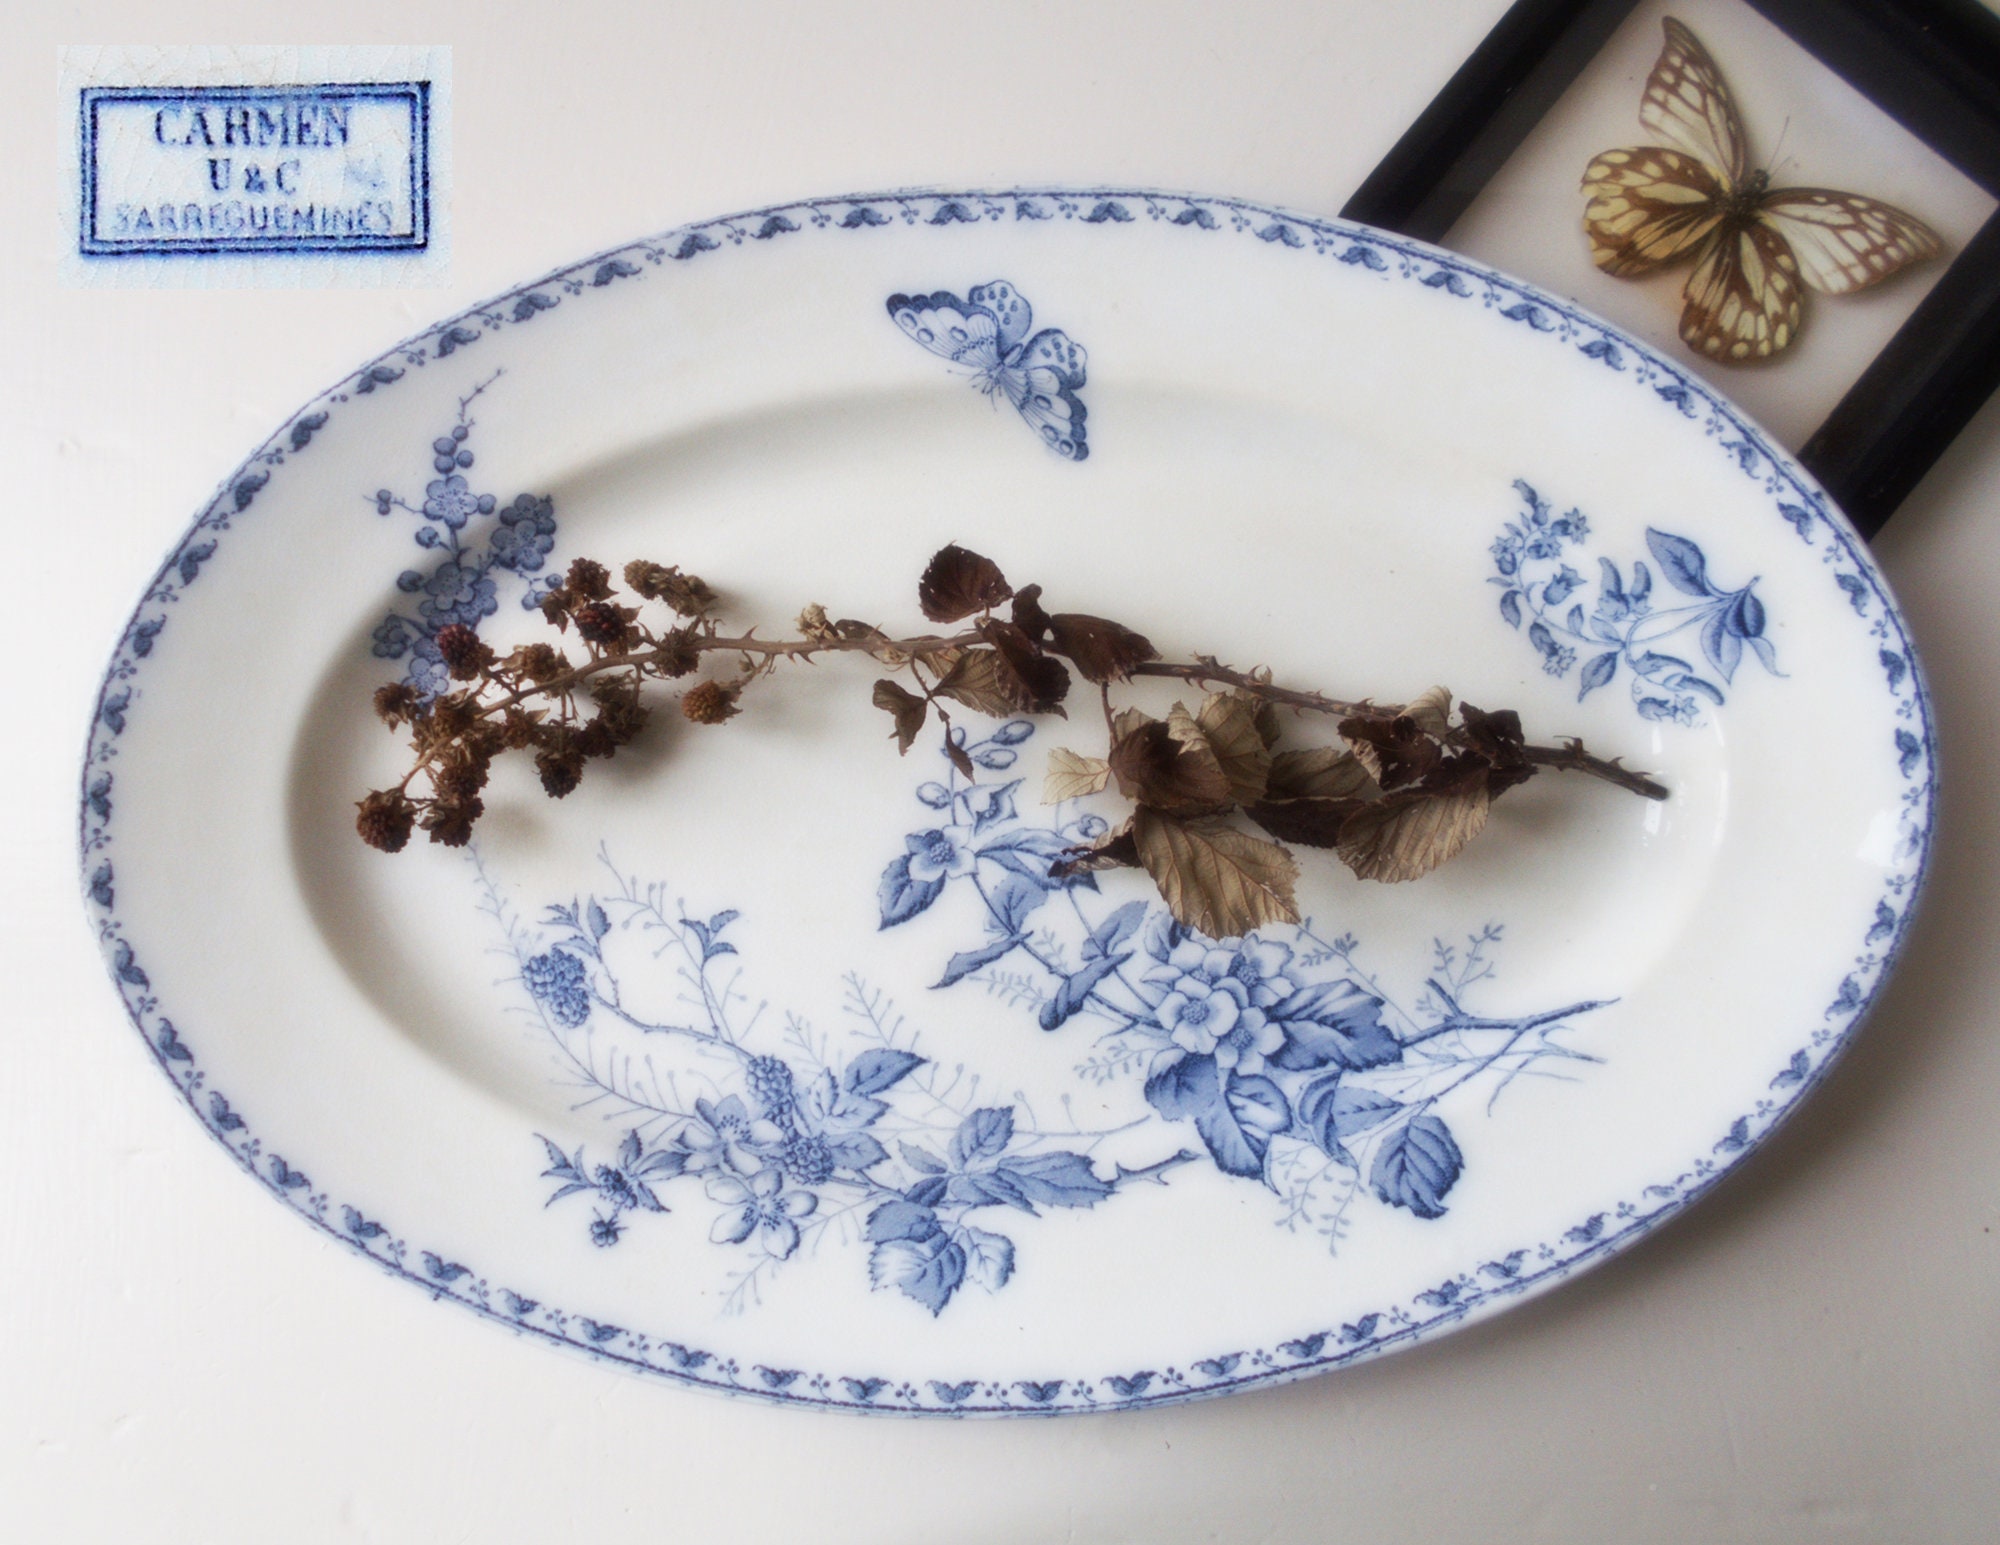 Grande Français Antique Assiette de Service Blanc et Bleu Ironstone Oval Dish 1800S U&c/ Sarreguemin